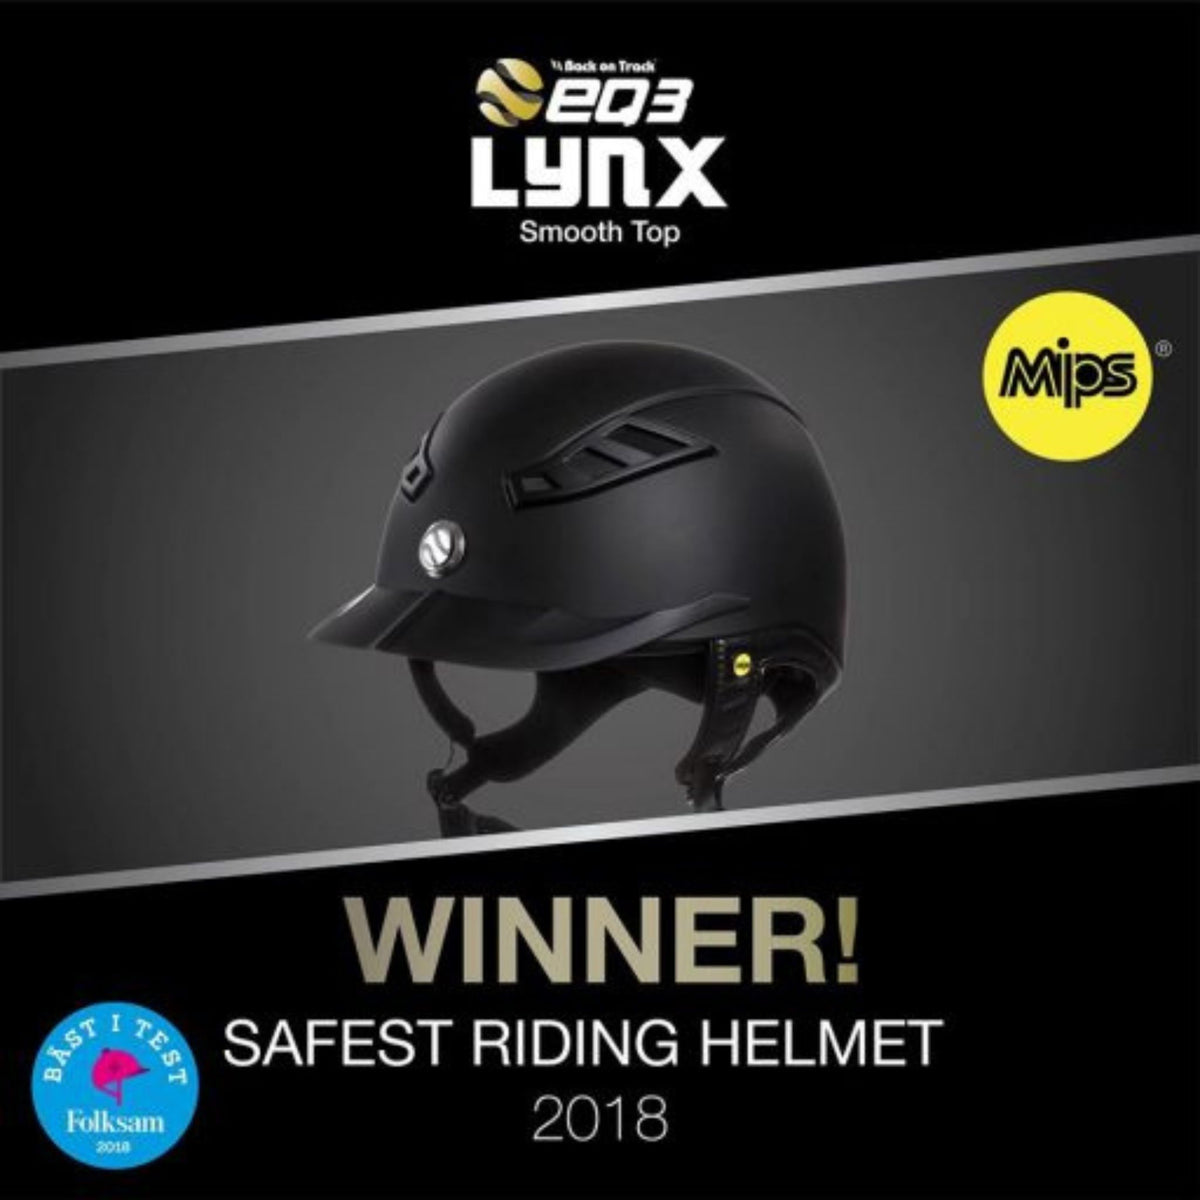 certificate for the safest riding helmet of 2018.